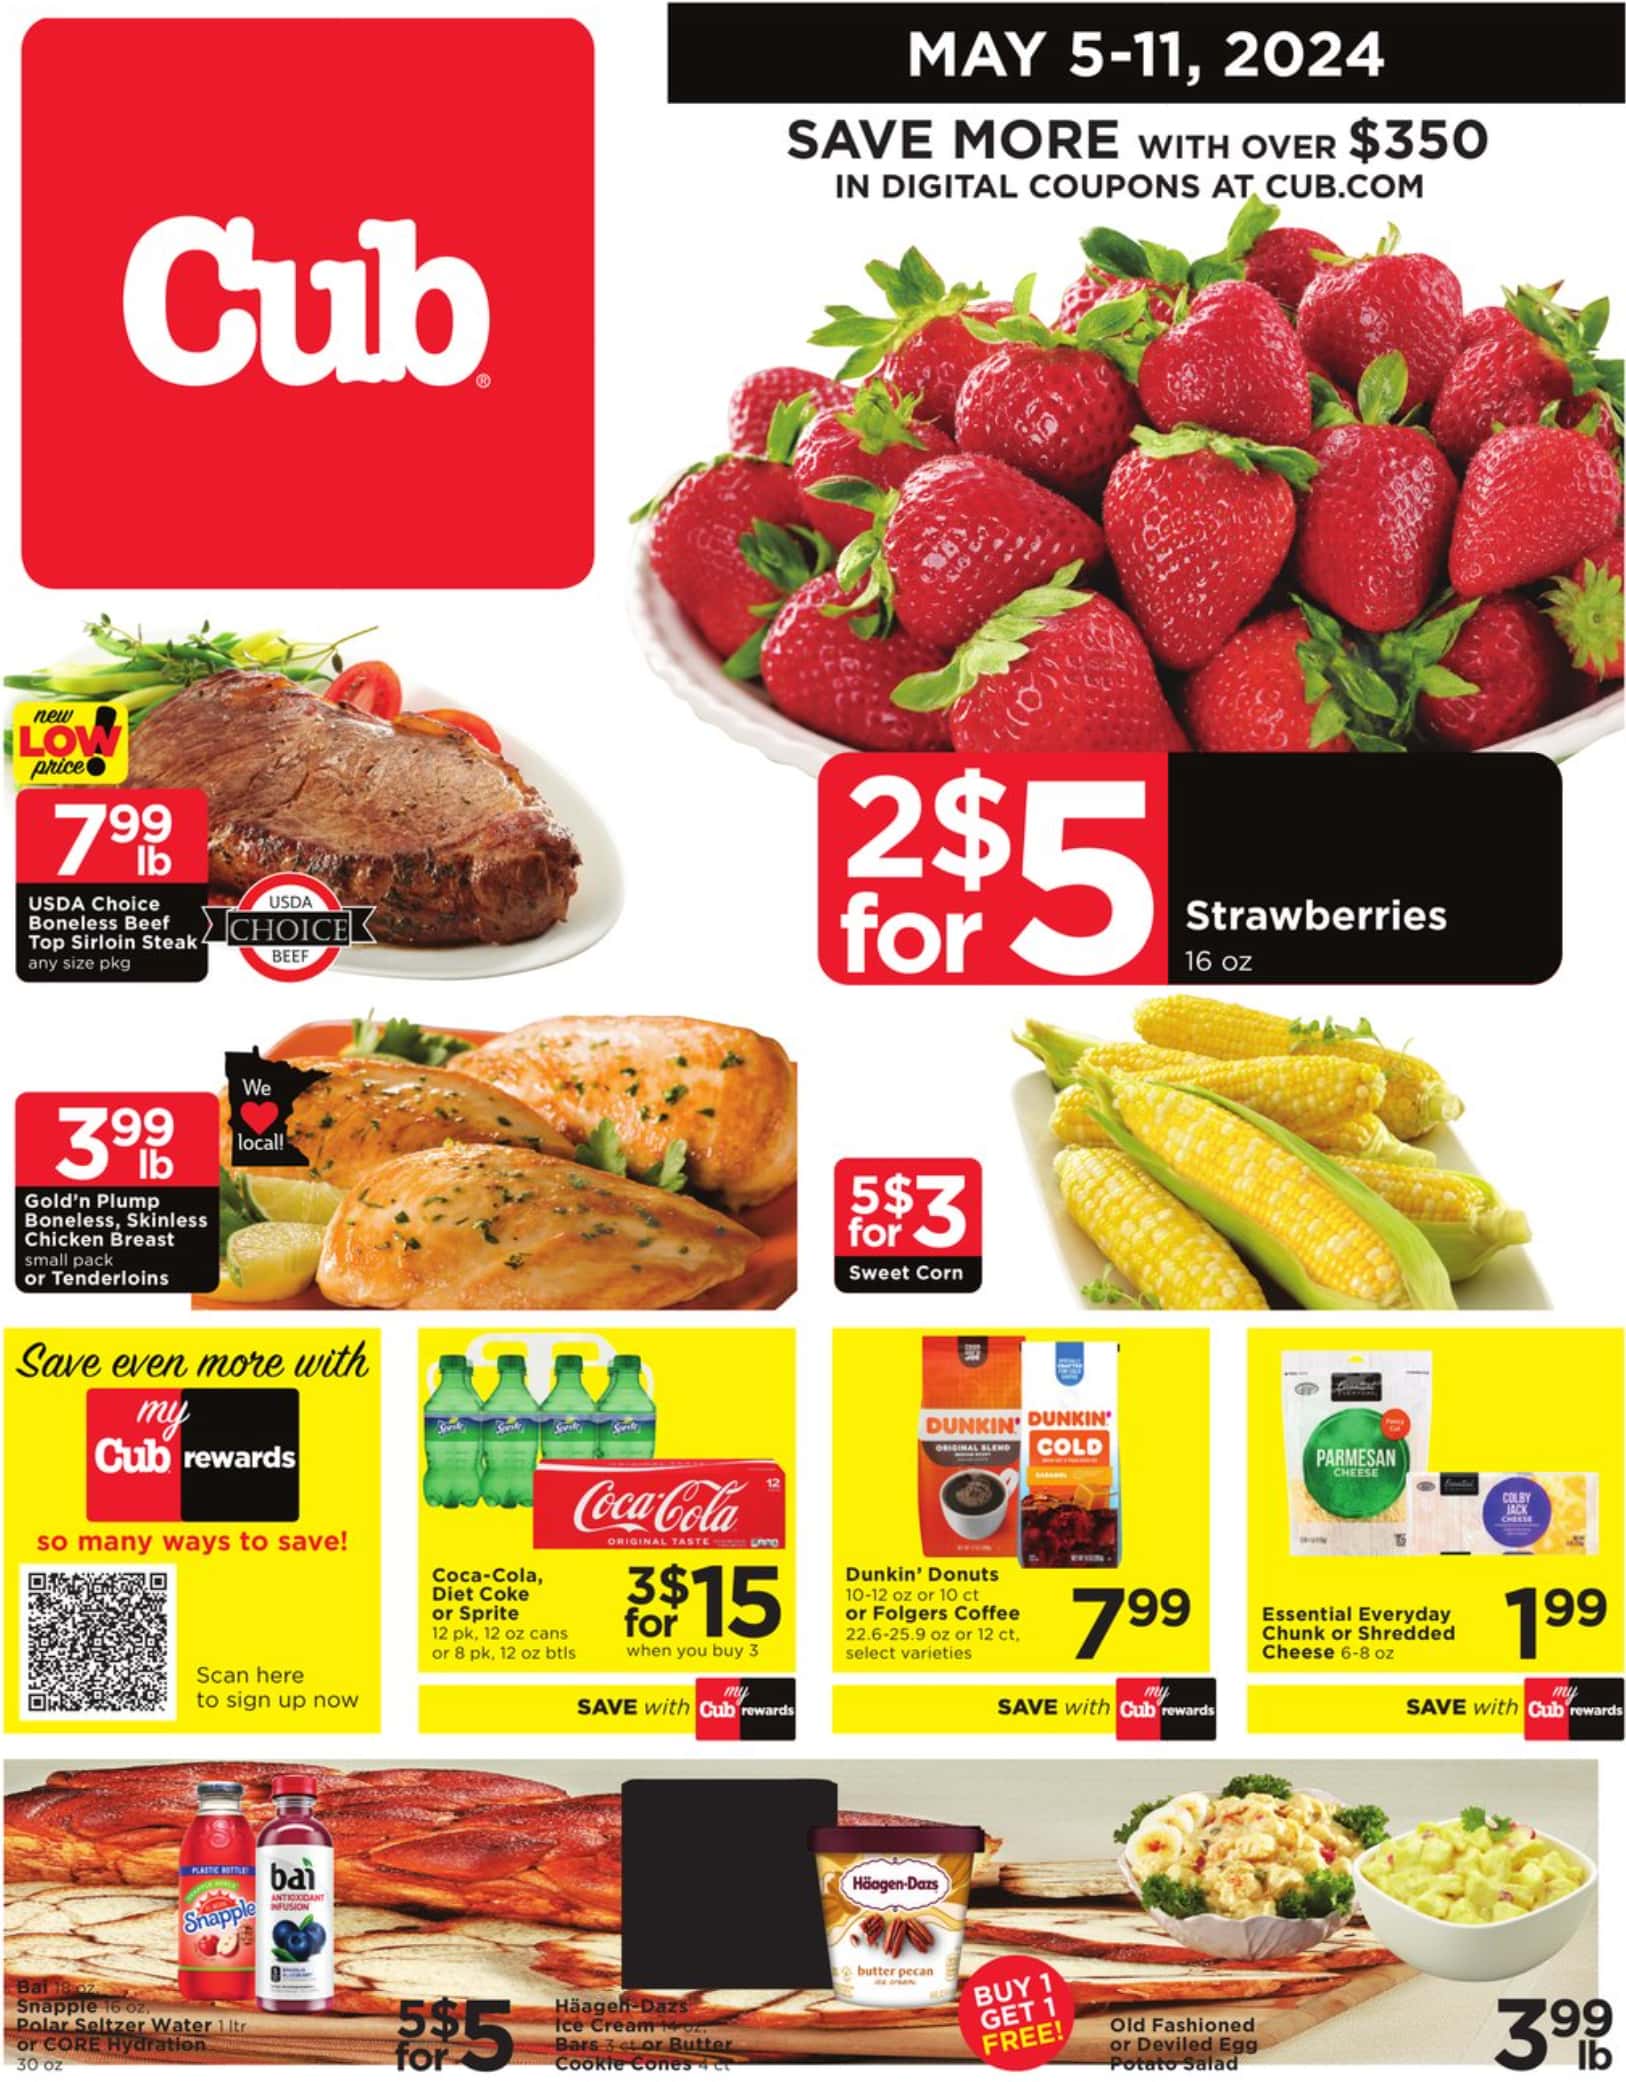 Cub Foods Weekly Ad May 5 - 11, 2024